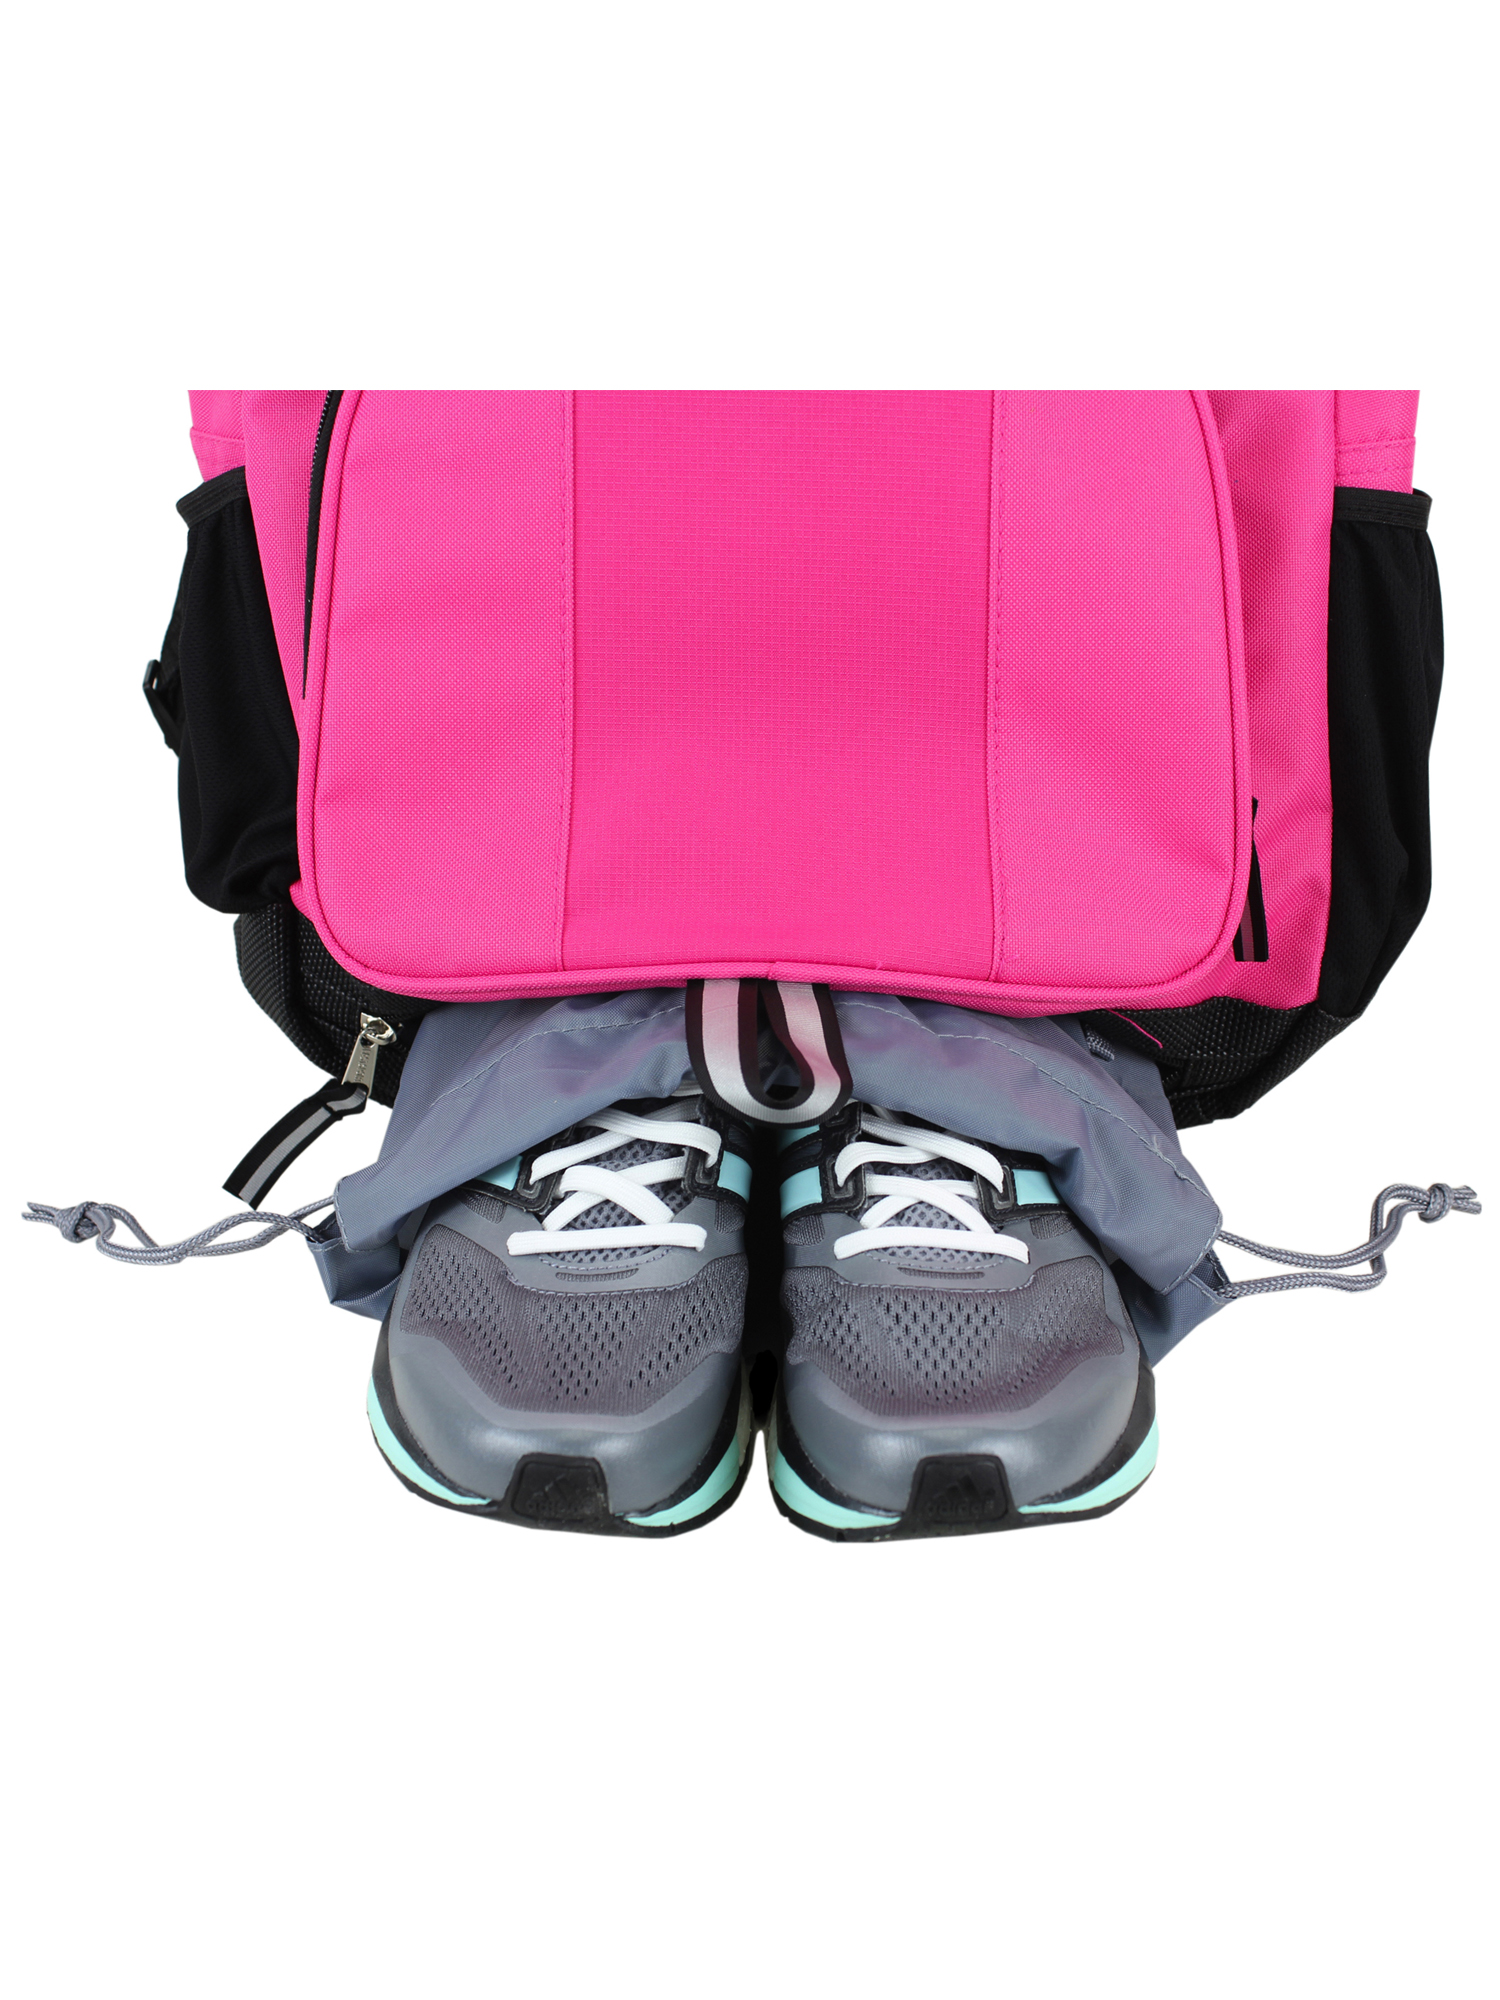 Eastsport Unisex Classic Backpack with Bonus Drawstring Bag Pink - image 5 of 6